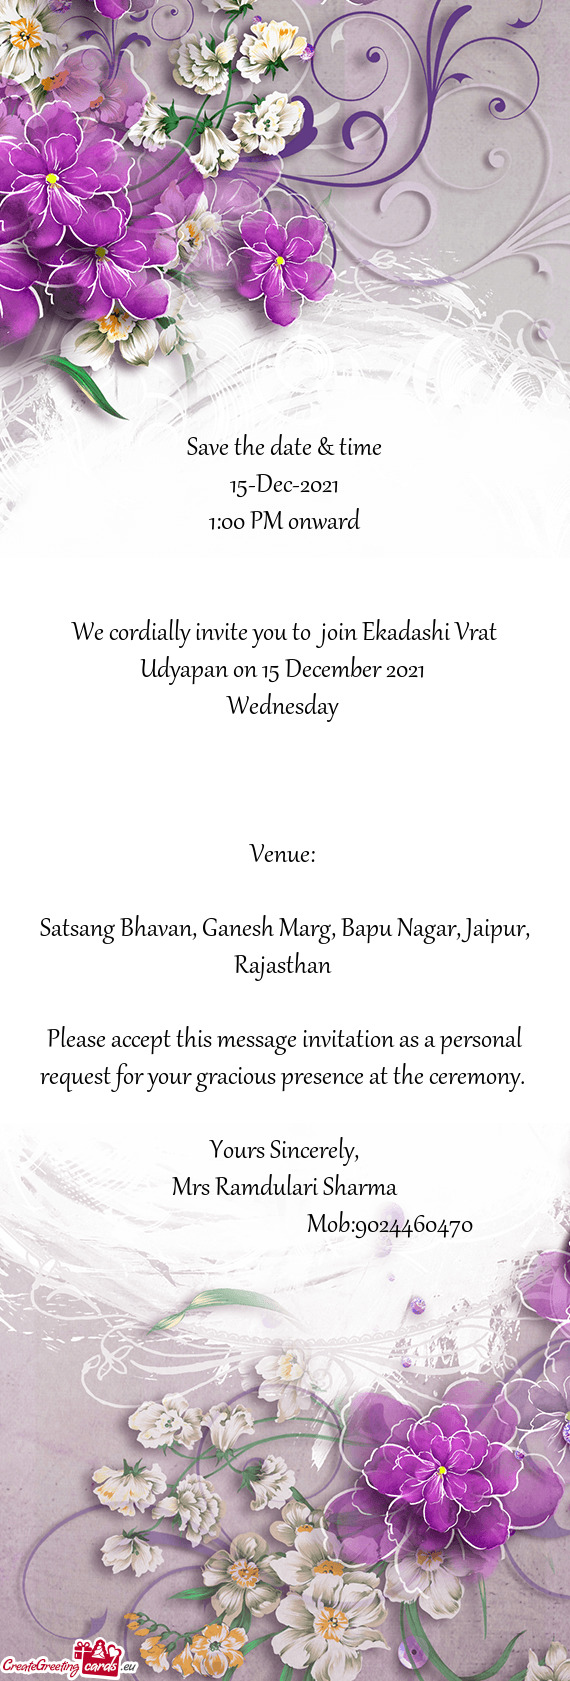 We cordially invite you to join Ekadashi Vrat Udyapan on 15 December 2021